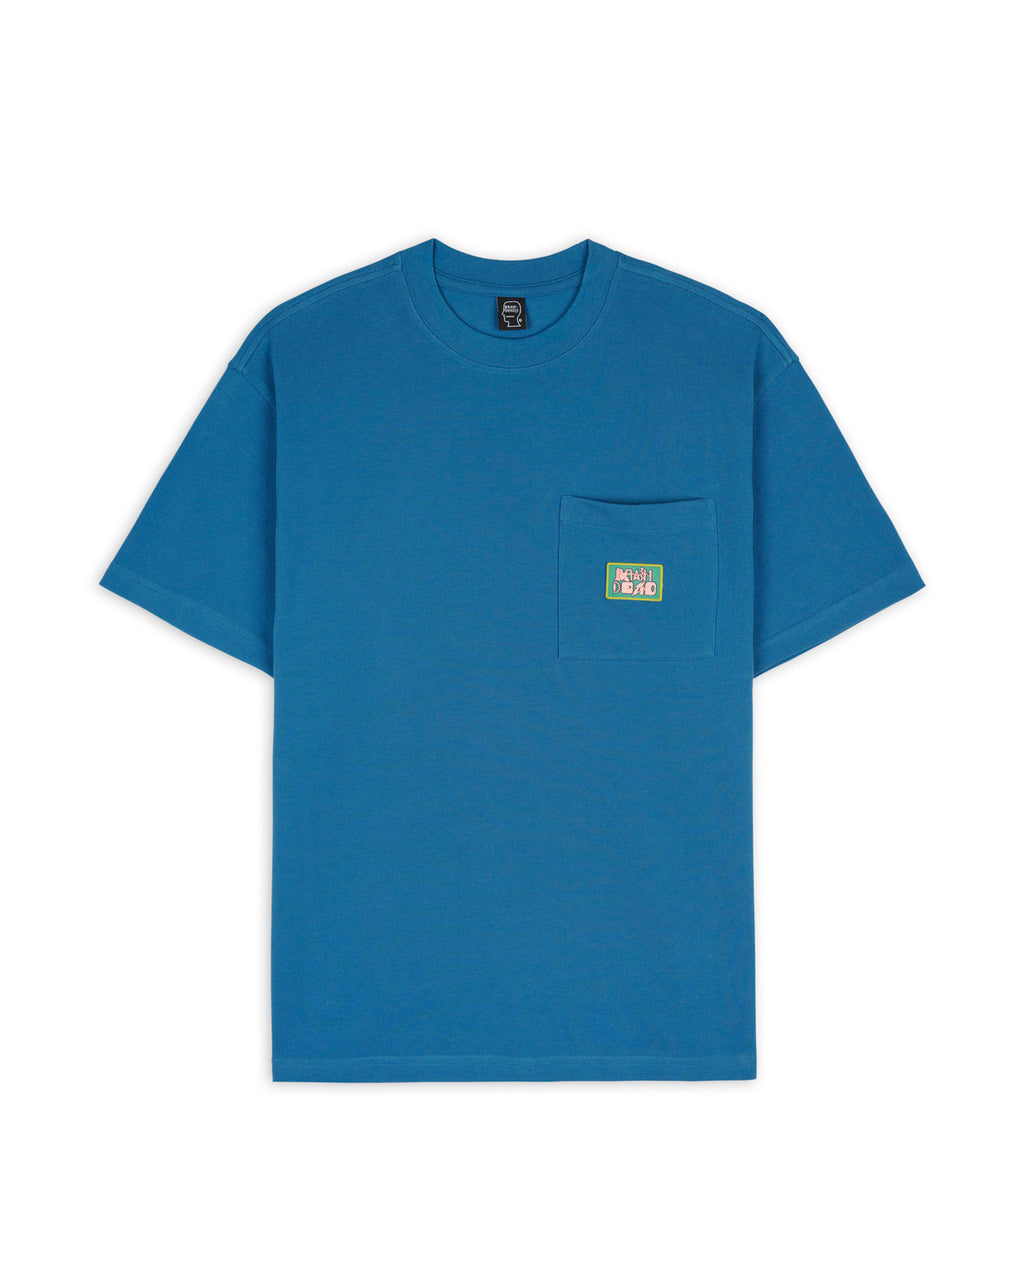 Tubes Pique T-Shirt - China Blue